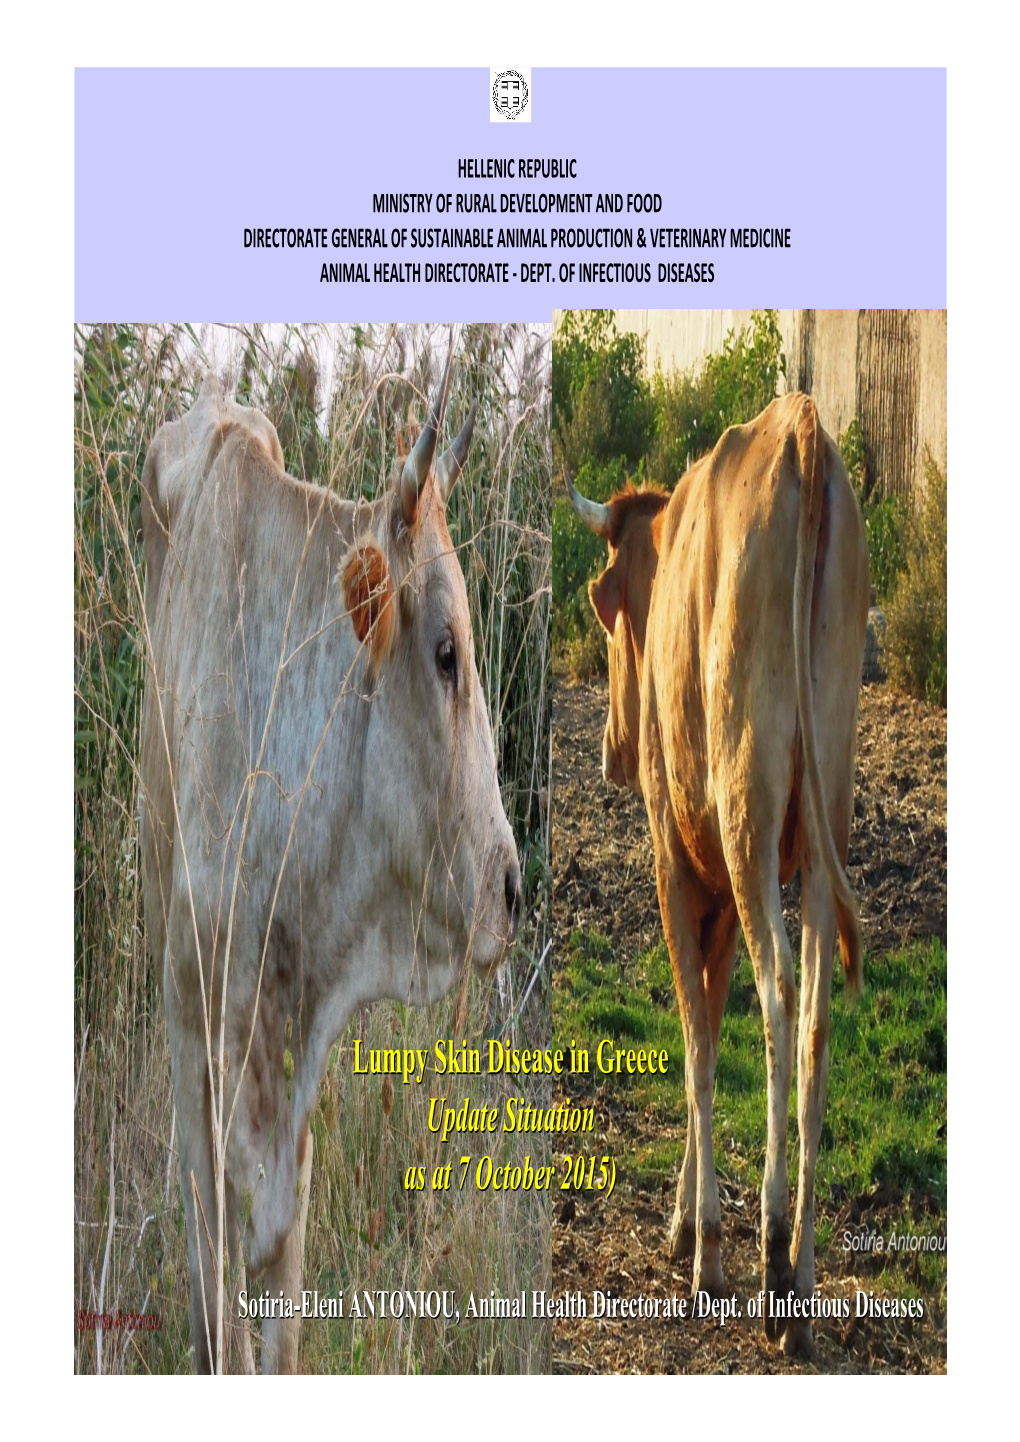 Lumpy Skin Disease Vaccine for Cattle